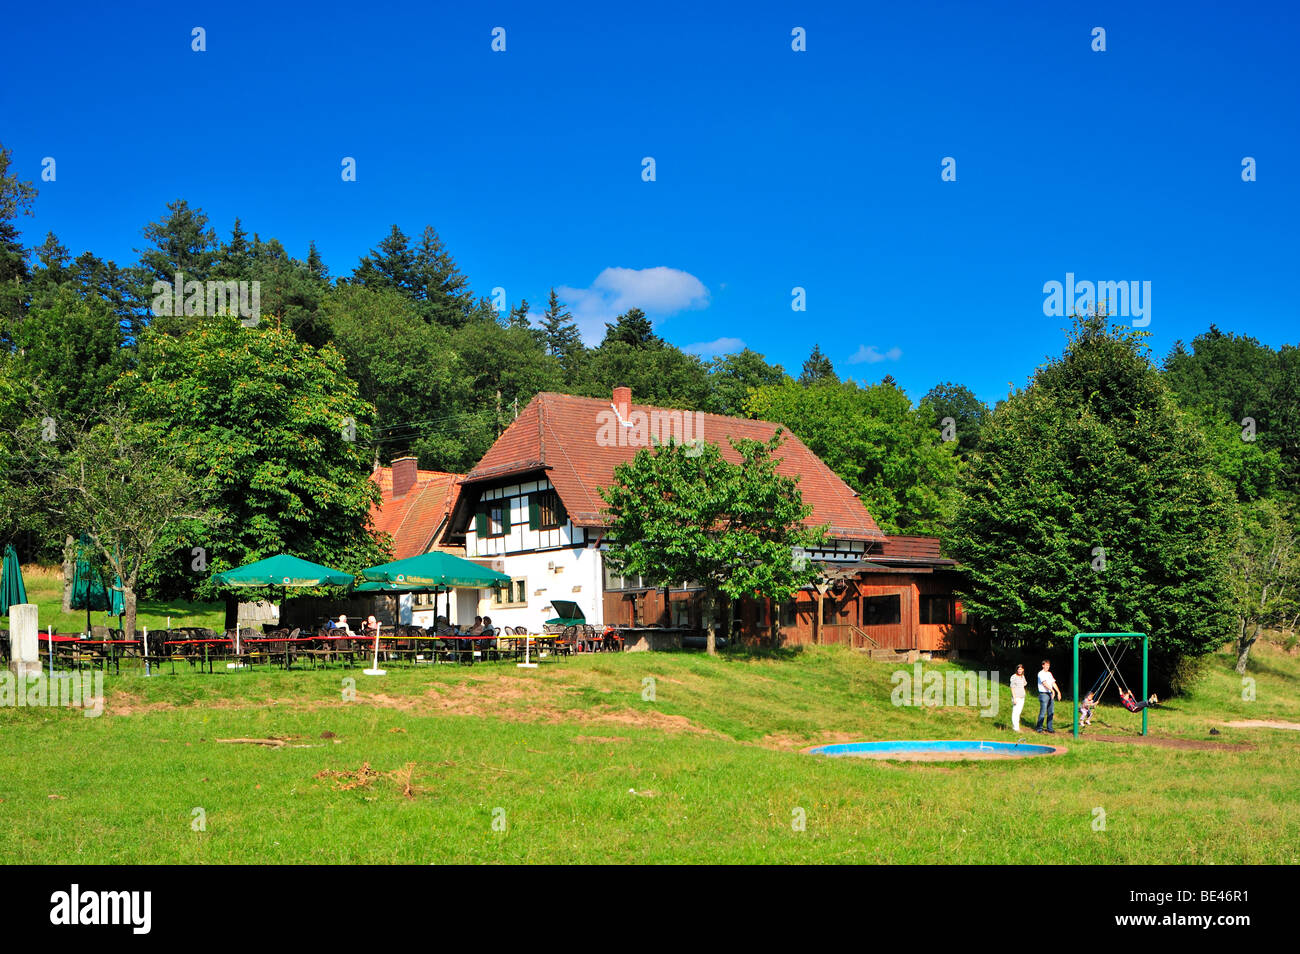 Annweiler Forsthaus guesthouse, Annweiler, Naturpark Pfaelzerwald nature reserve, Palatinat, Rhénanie-Palatinat, Allemagne, Union européenne Banque D'Images